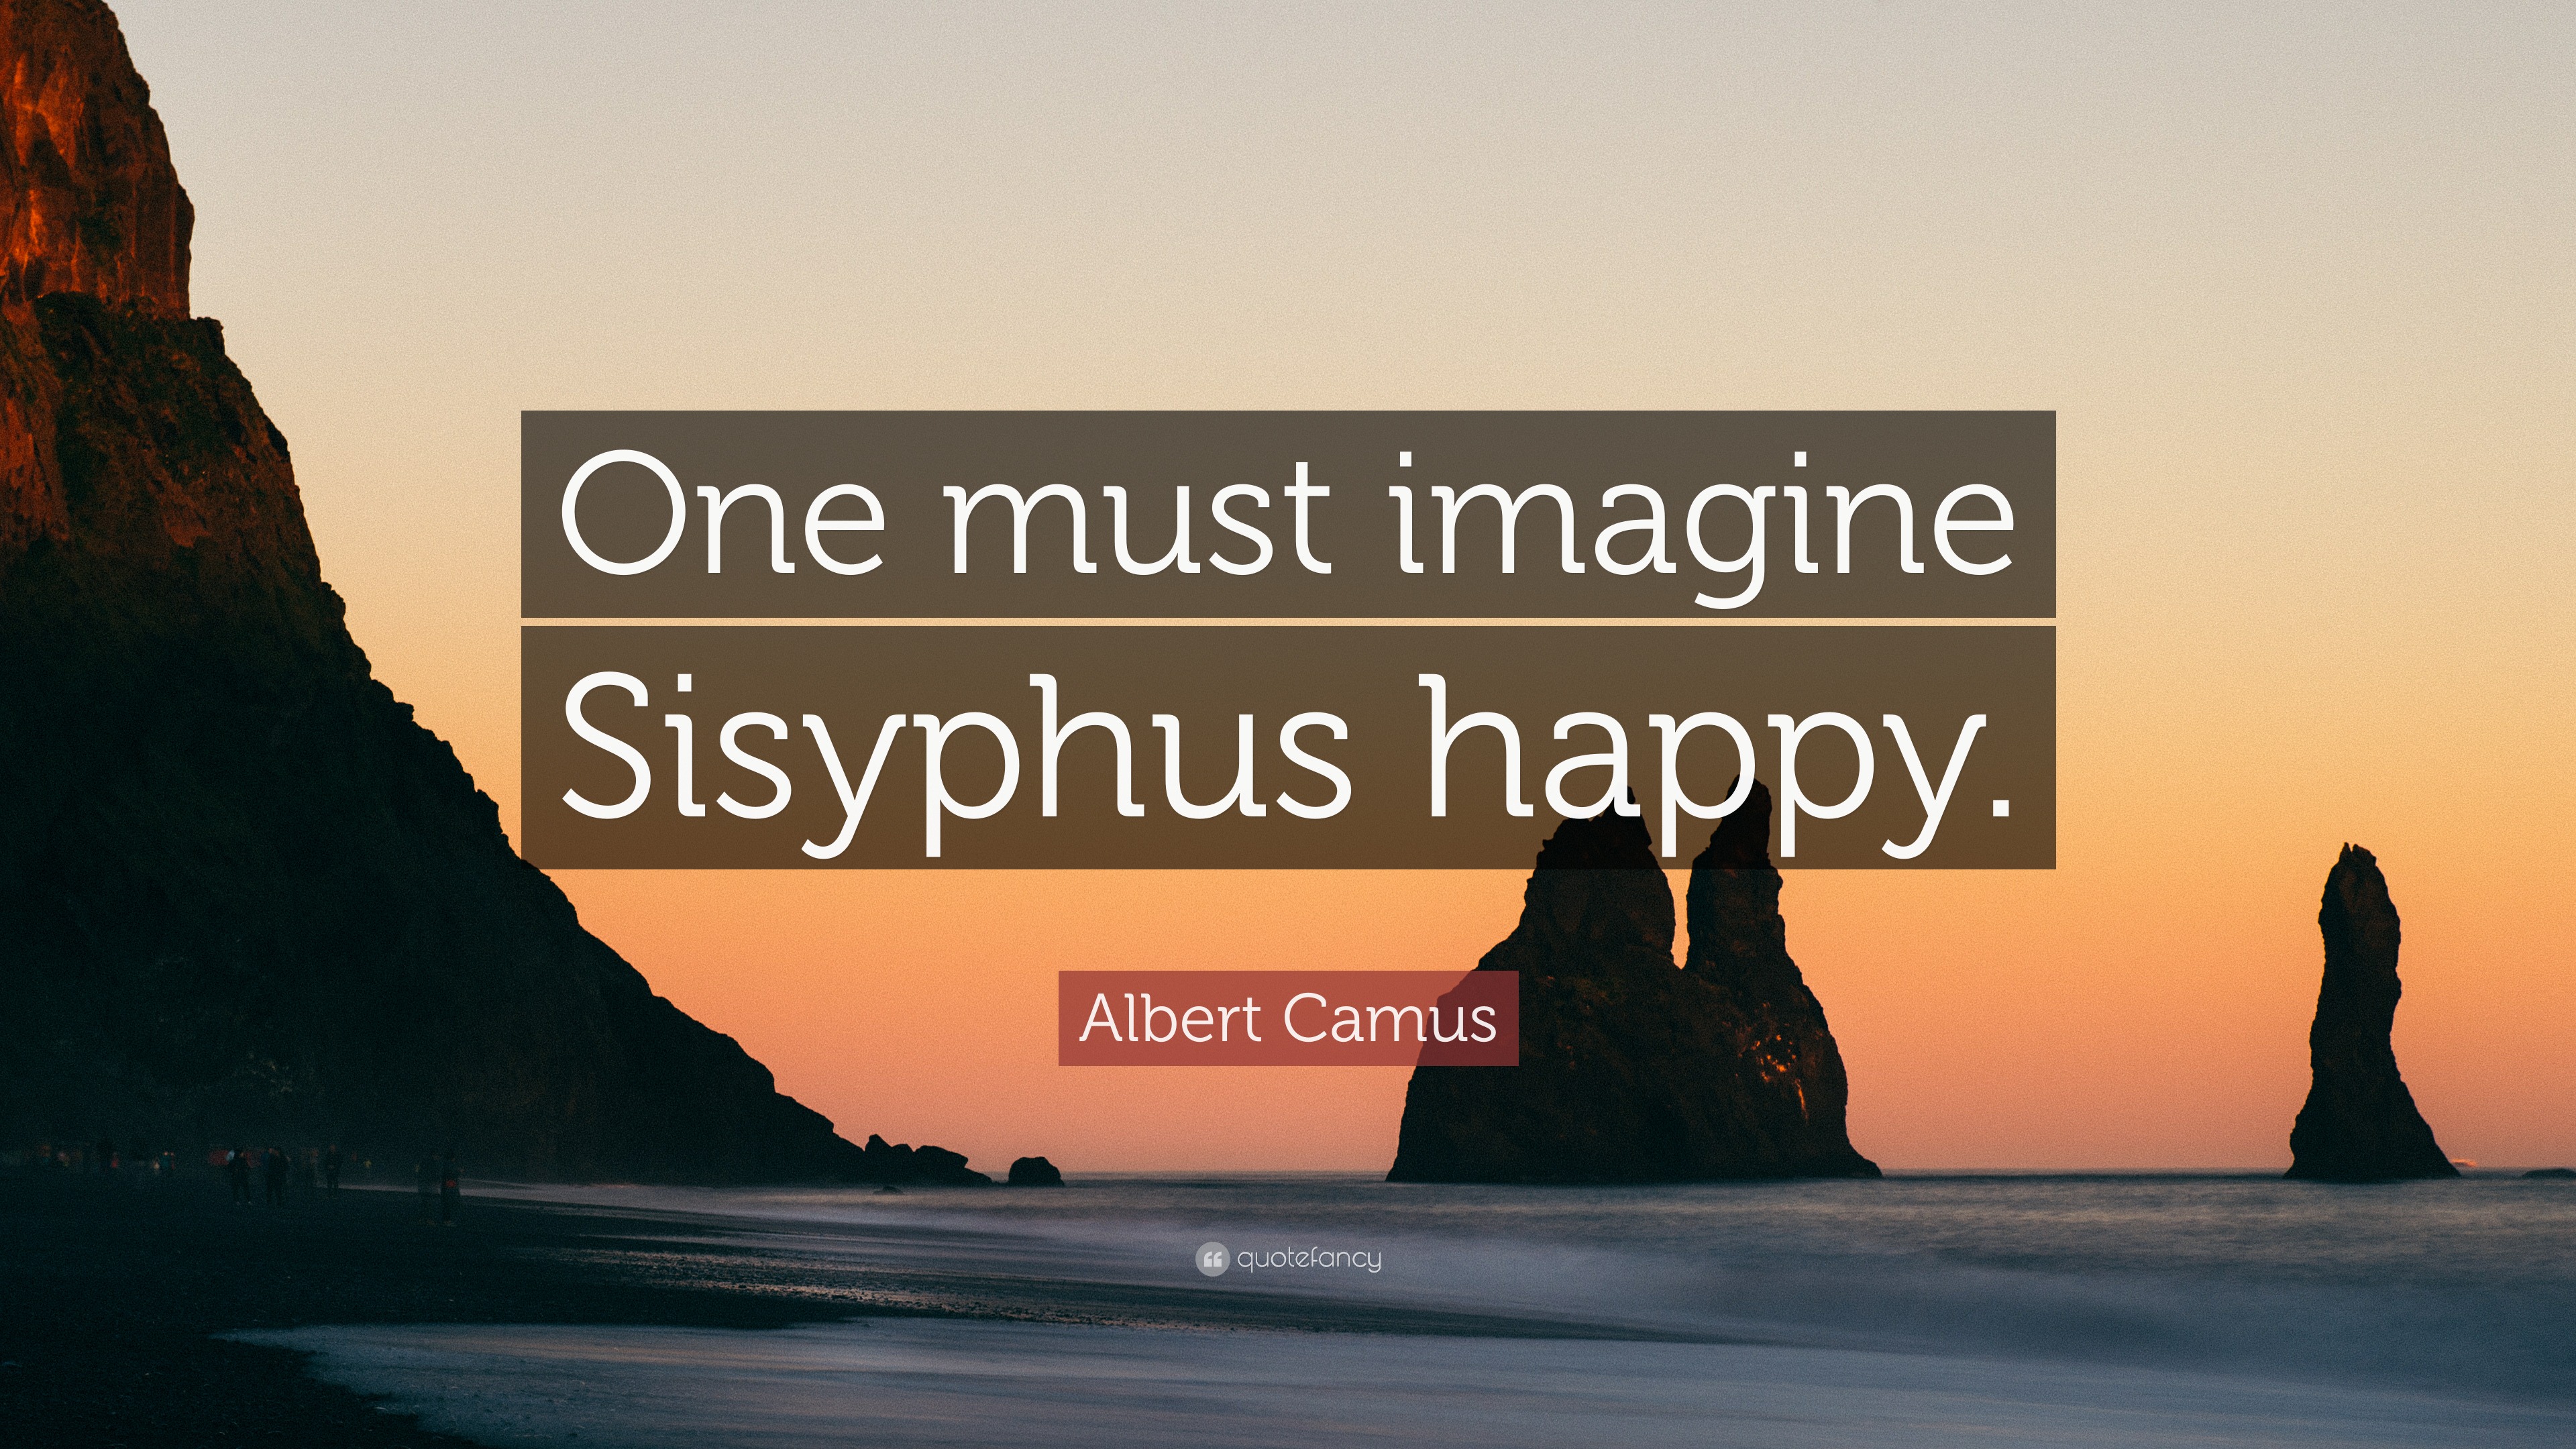 one must imagine sisyphus happy